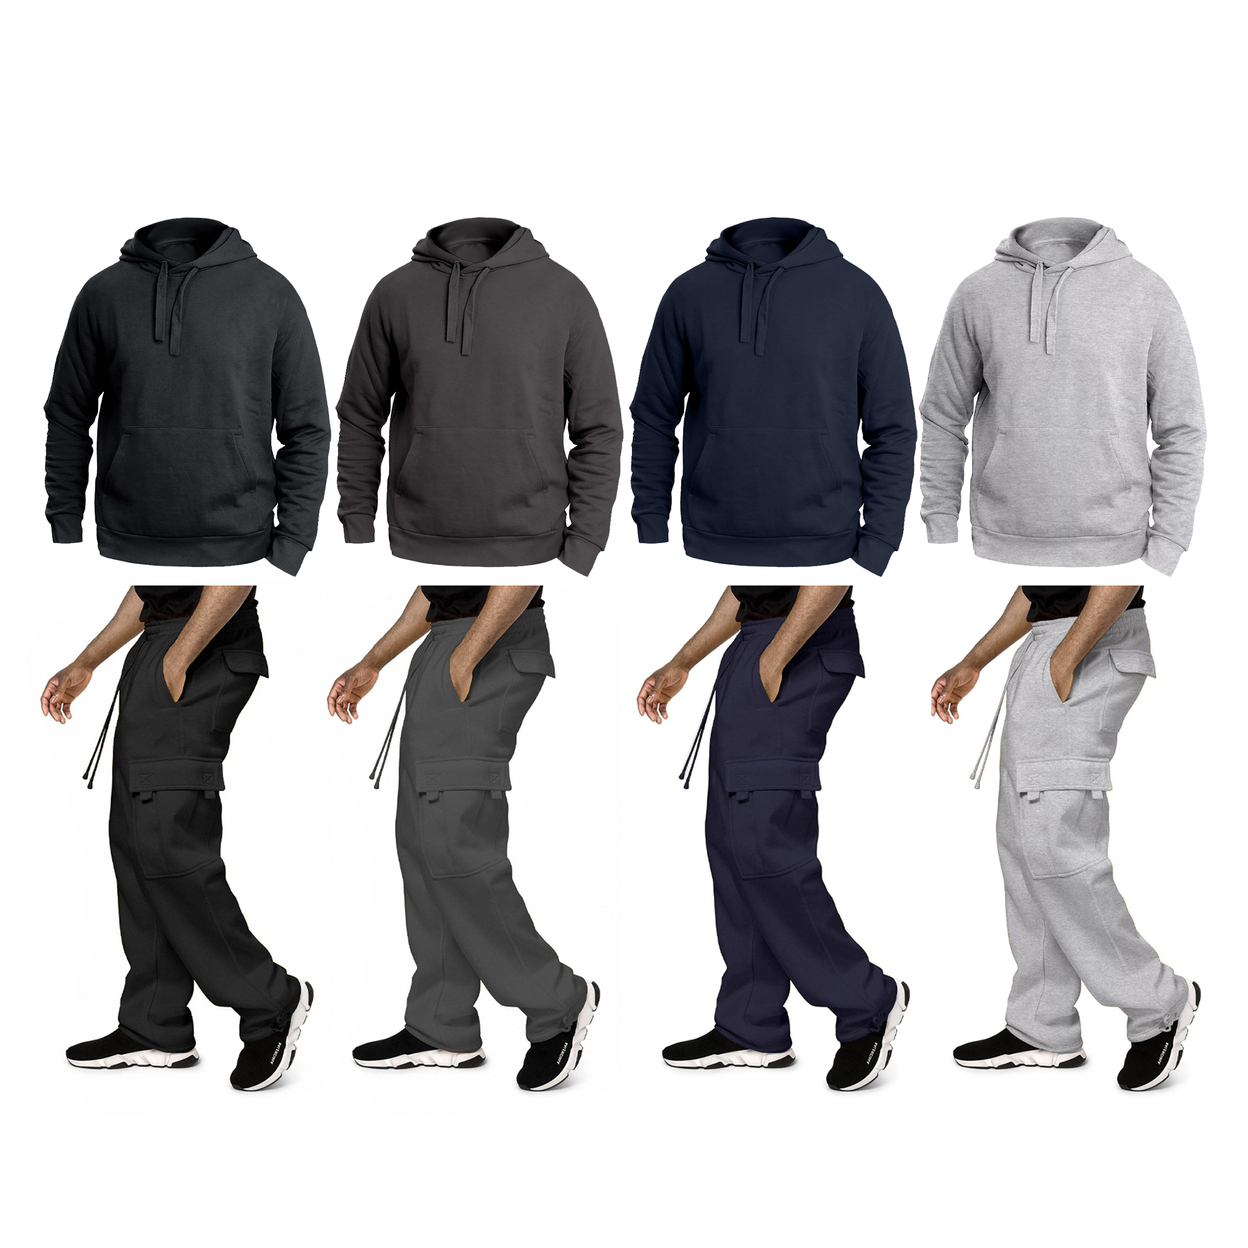 Men's Big & Tall Winter Warm Cozy Athletic Fleece Lined Multi-Pocket Cargo Sweatsuit - Black, Xx-large